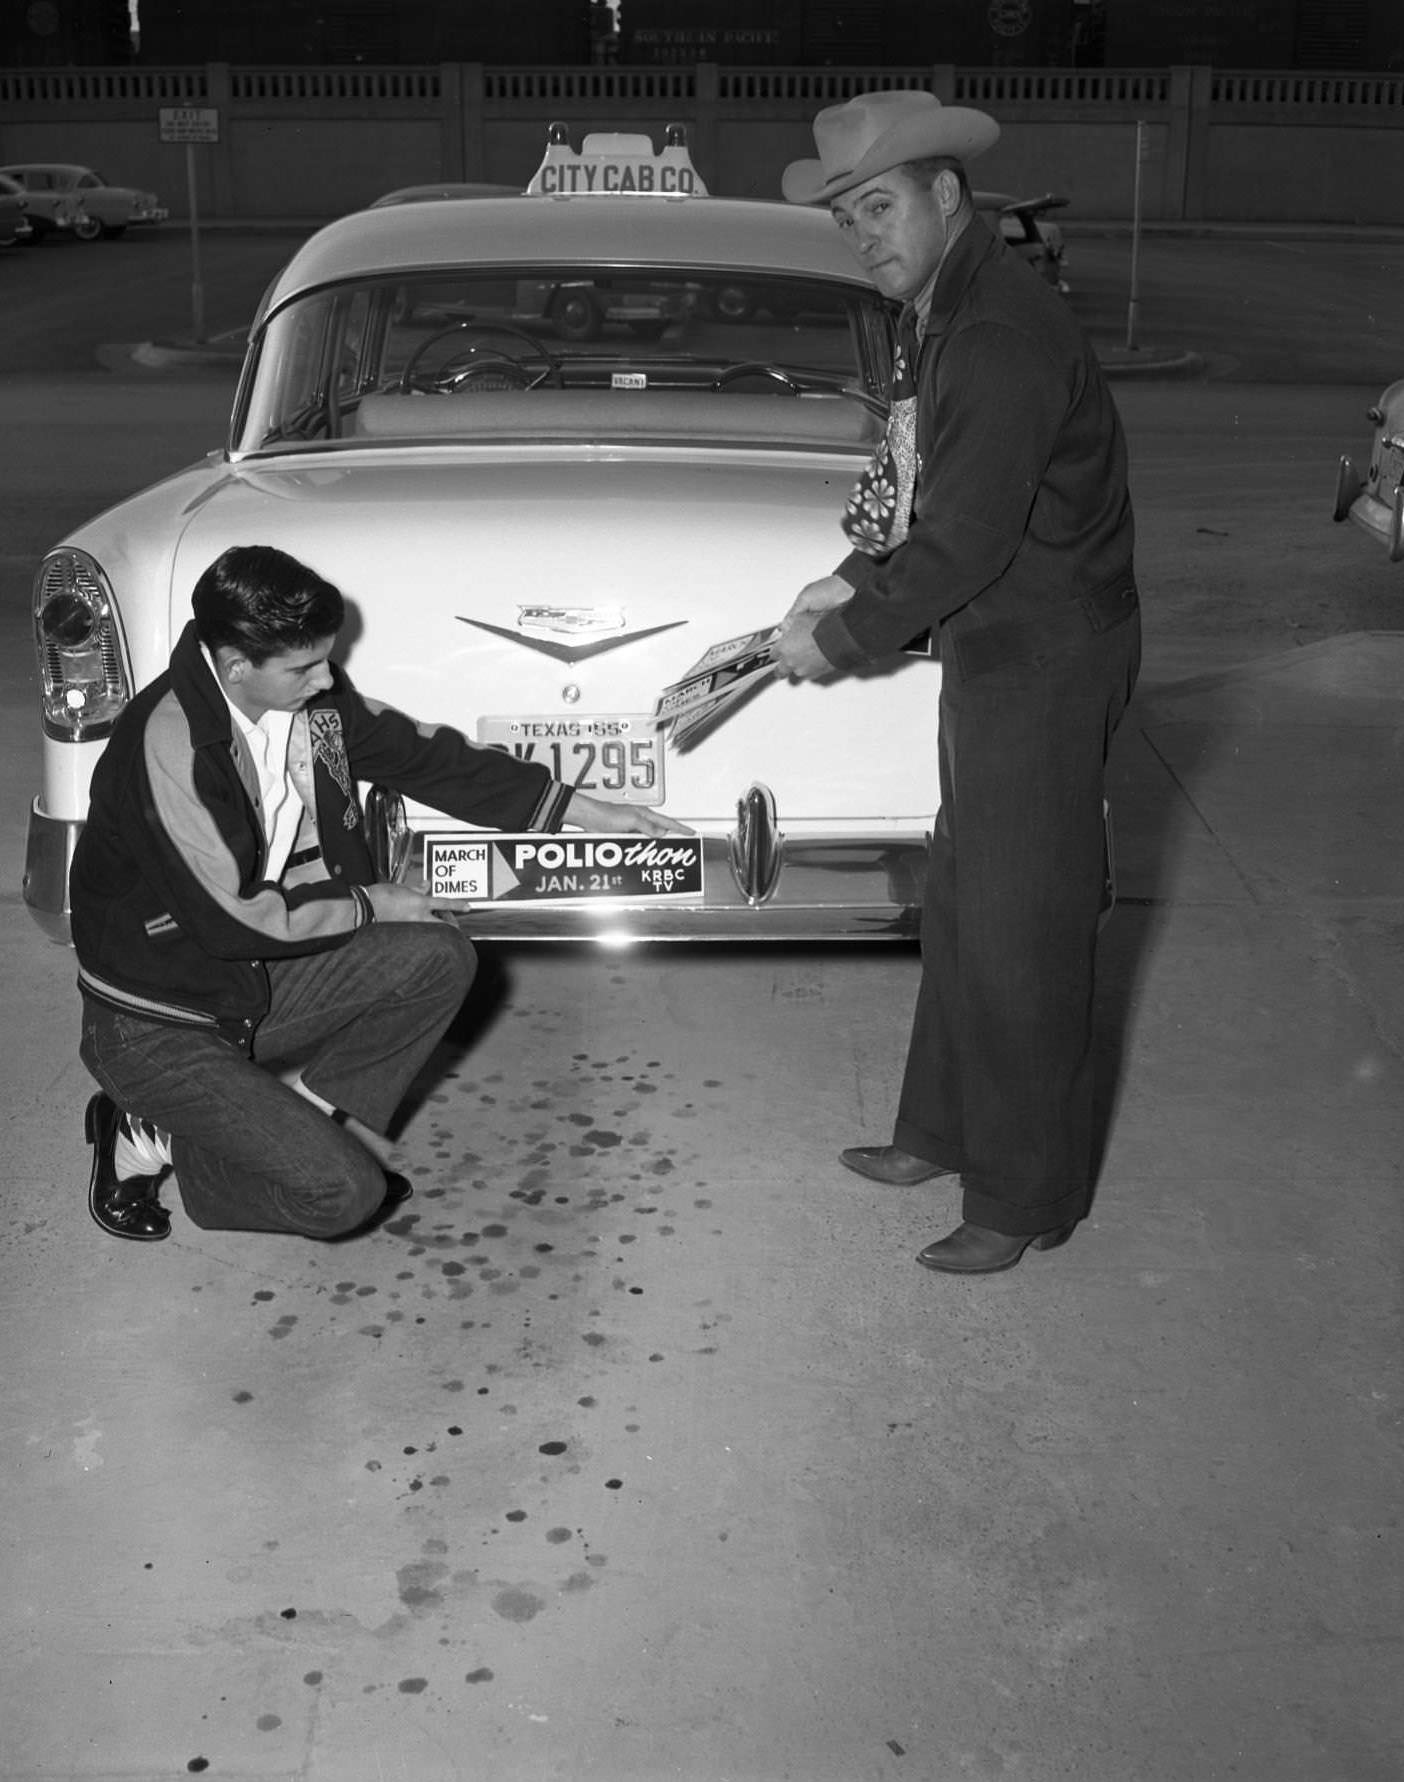 City Cab Polio Drive, 1955